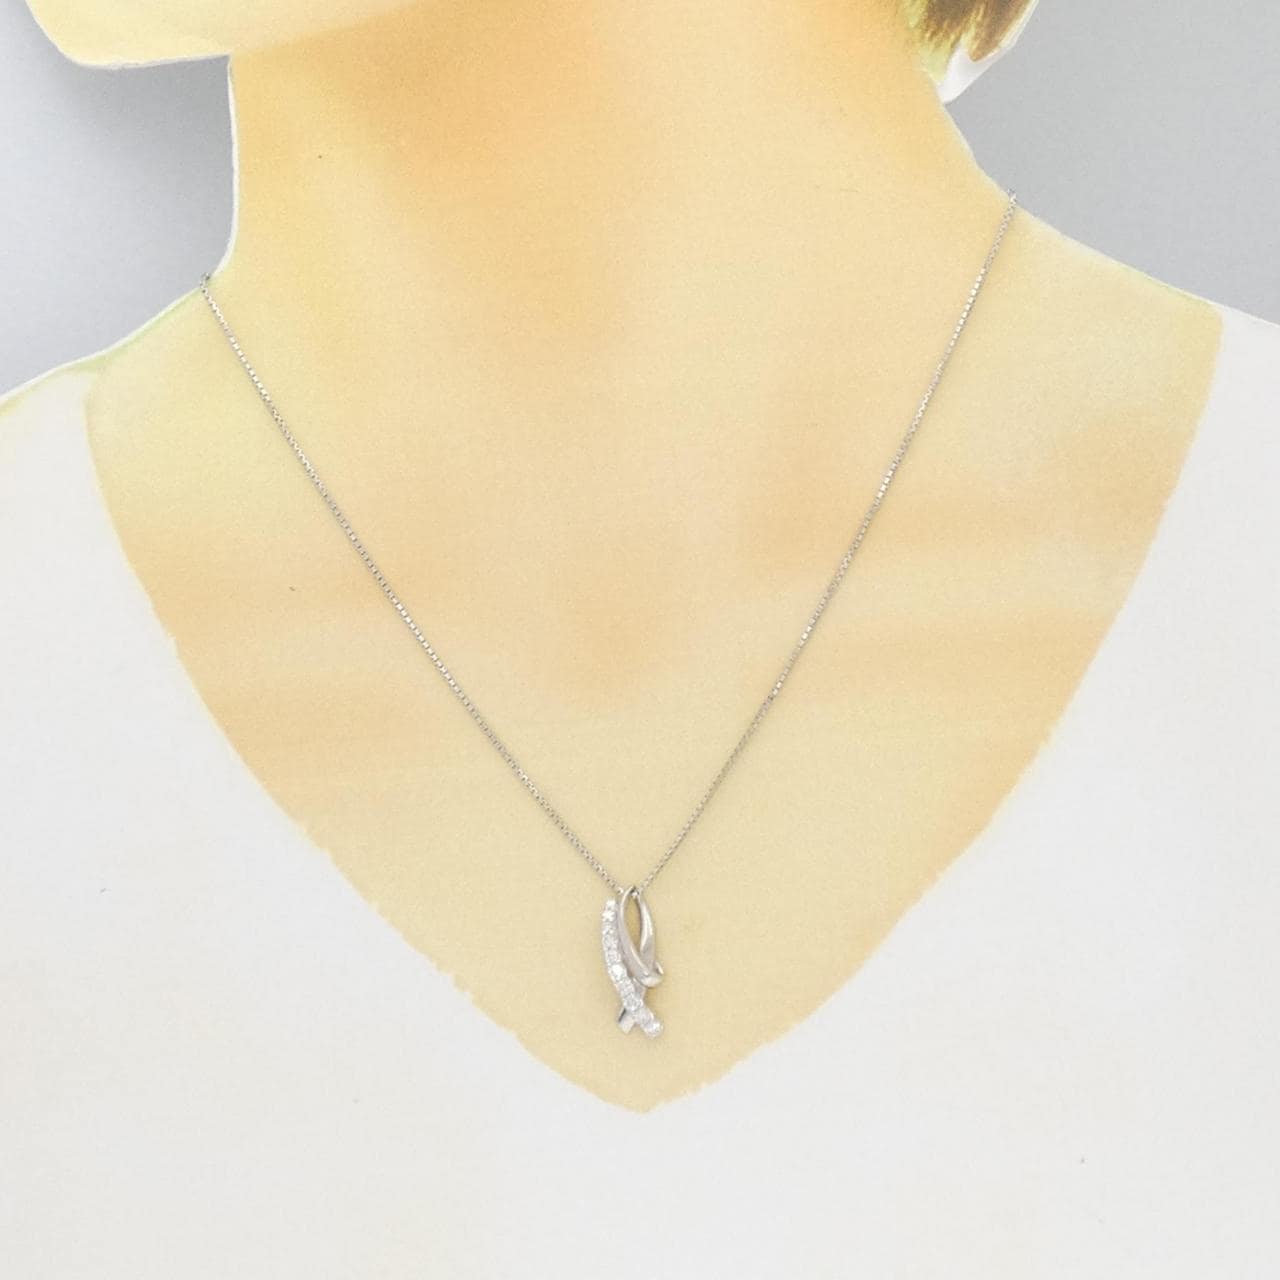 PT/K18WG Diamond necklace 0.35CT